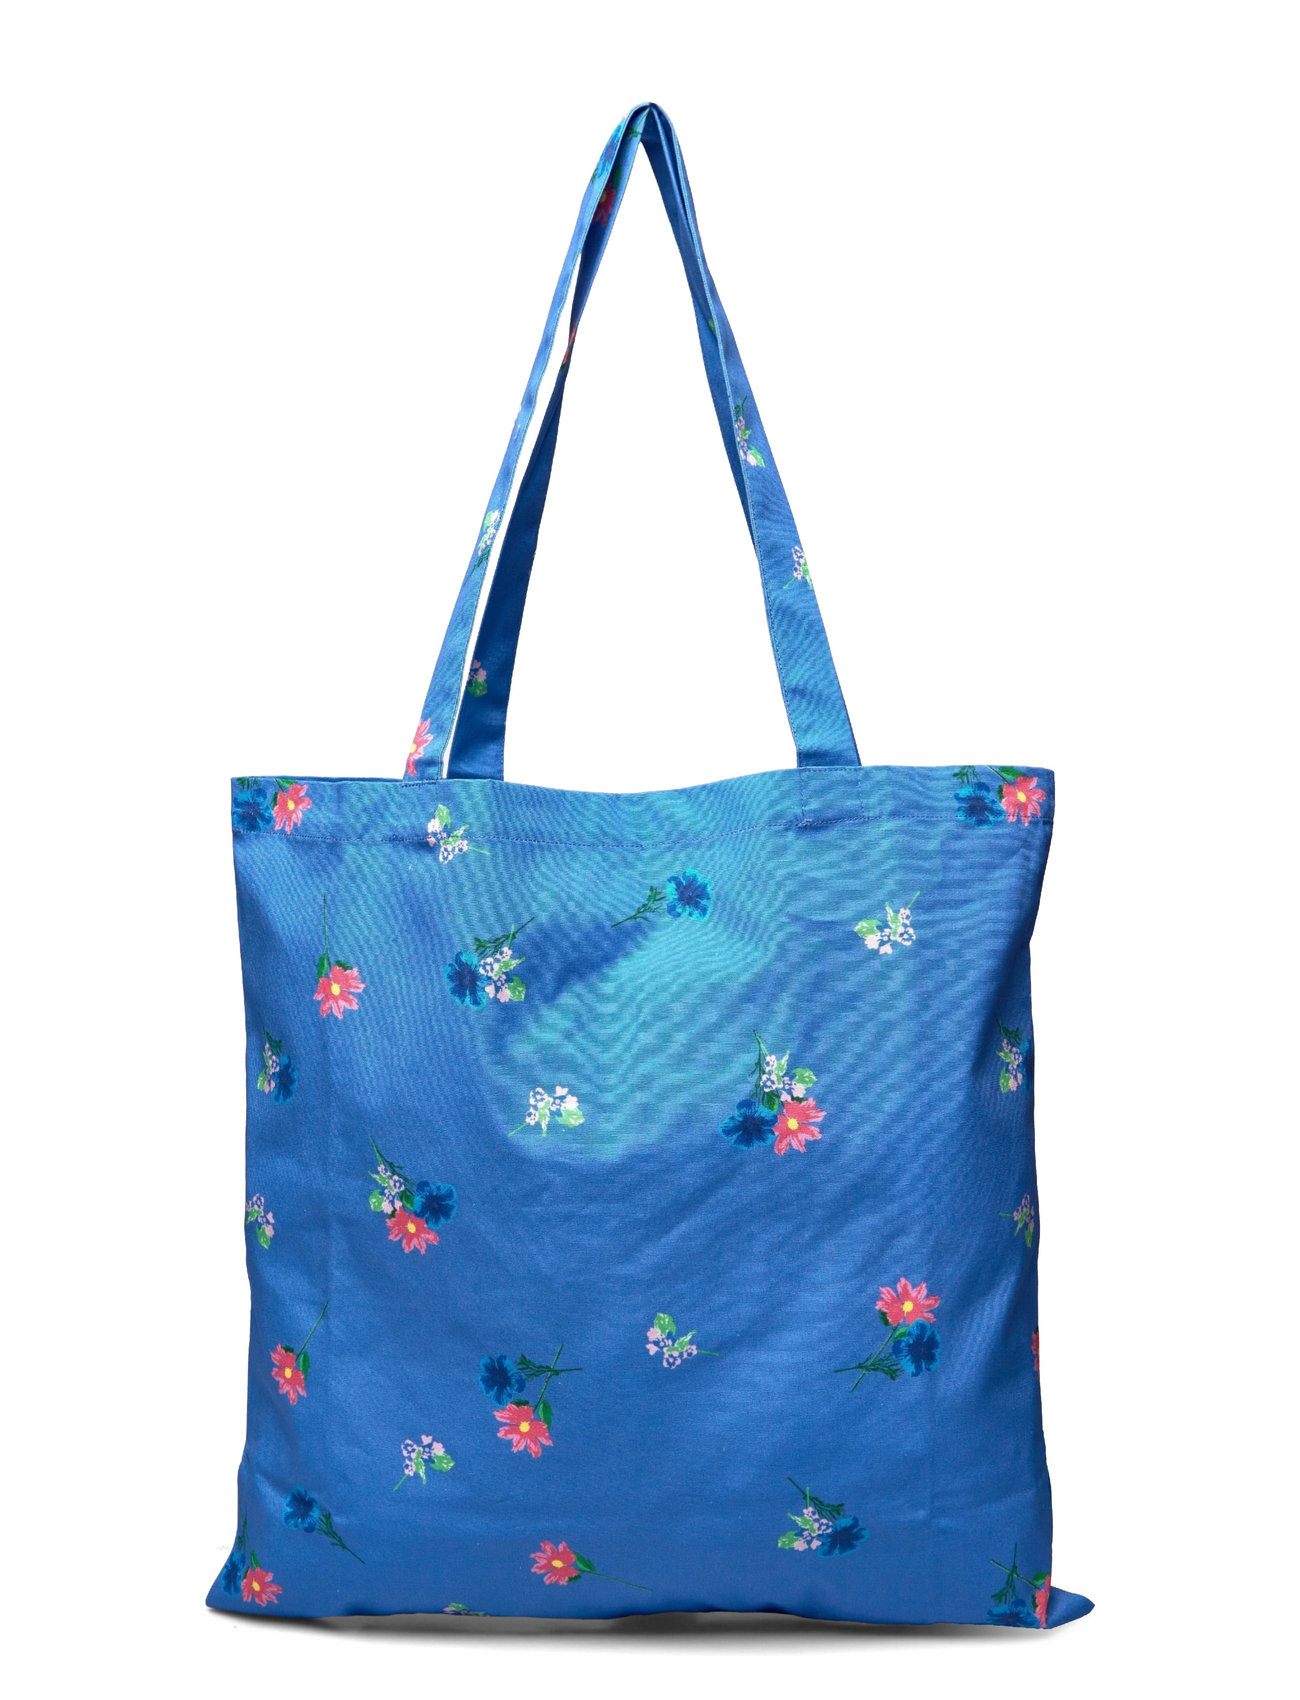 Envii Enwrigley Tote Bag Aop 6367 - Shoppers & Tote Bags - Boozt.com